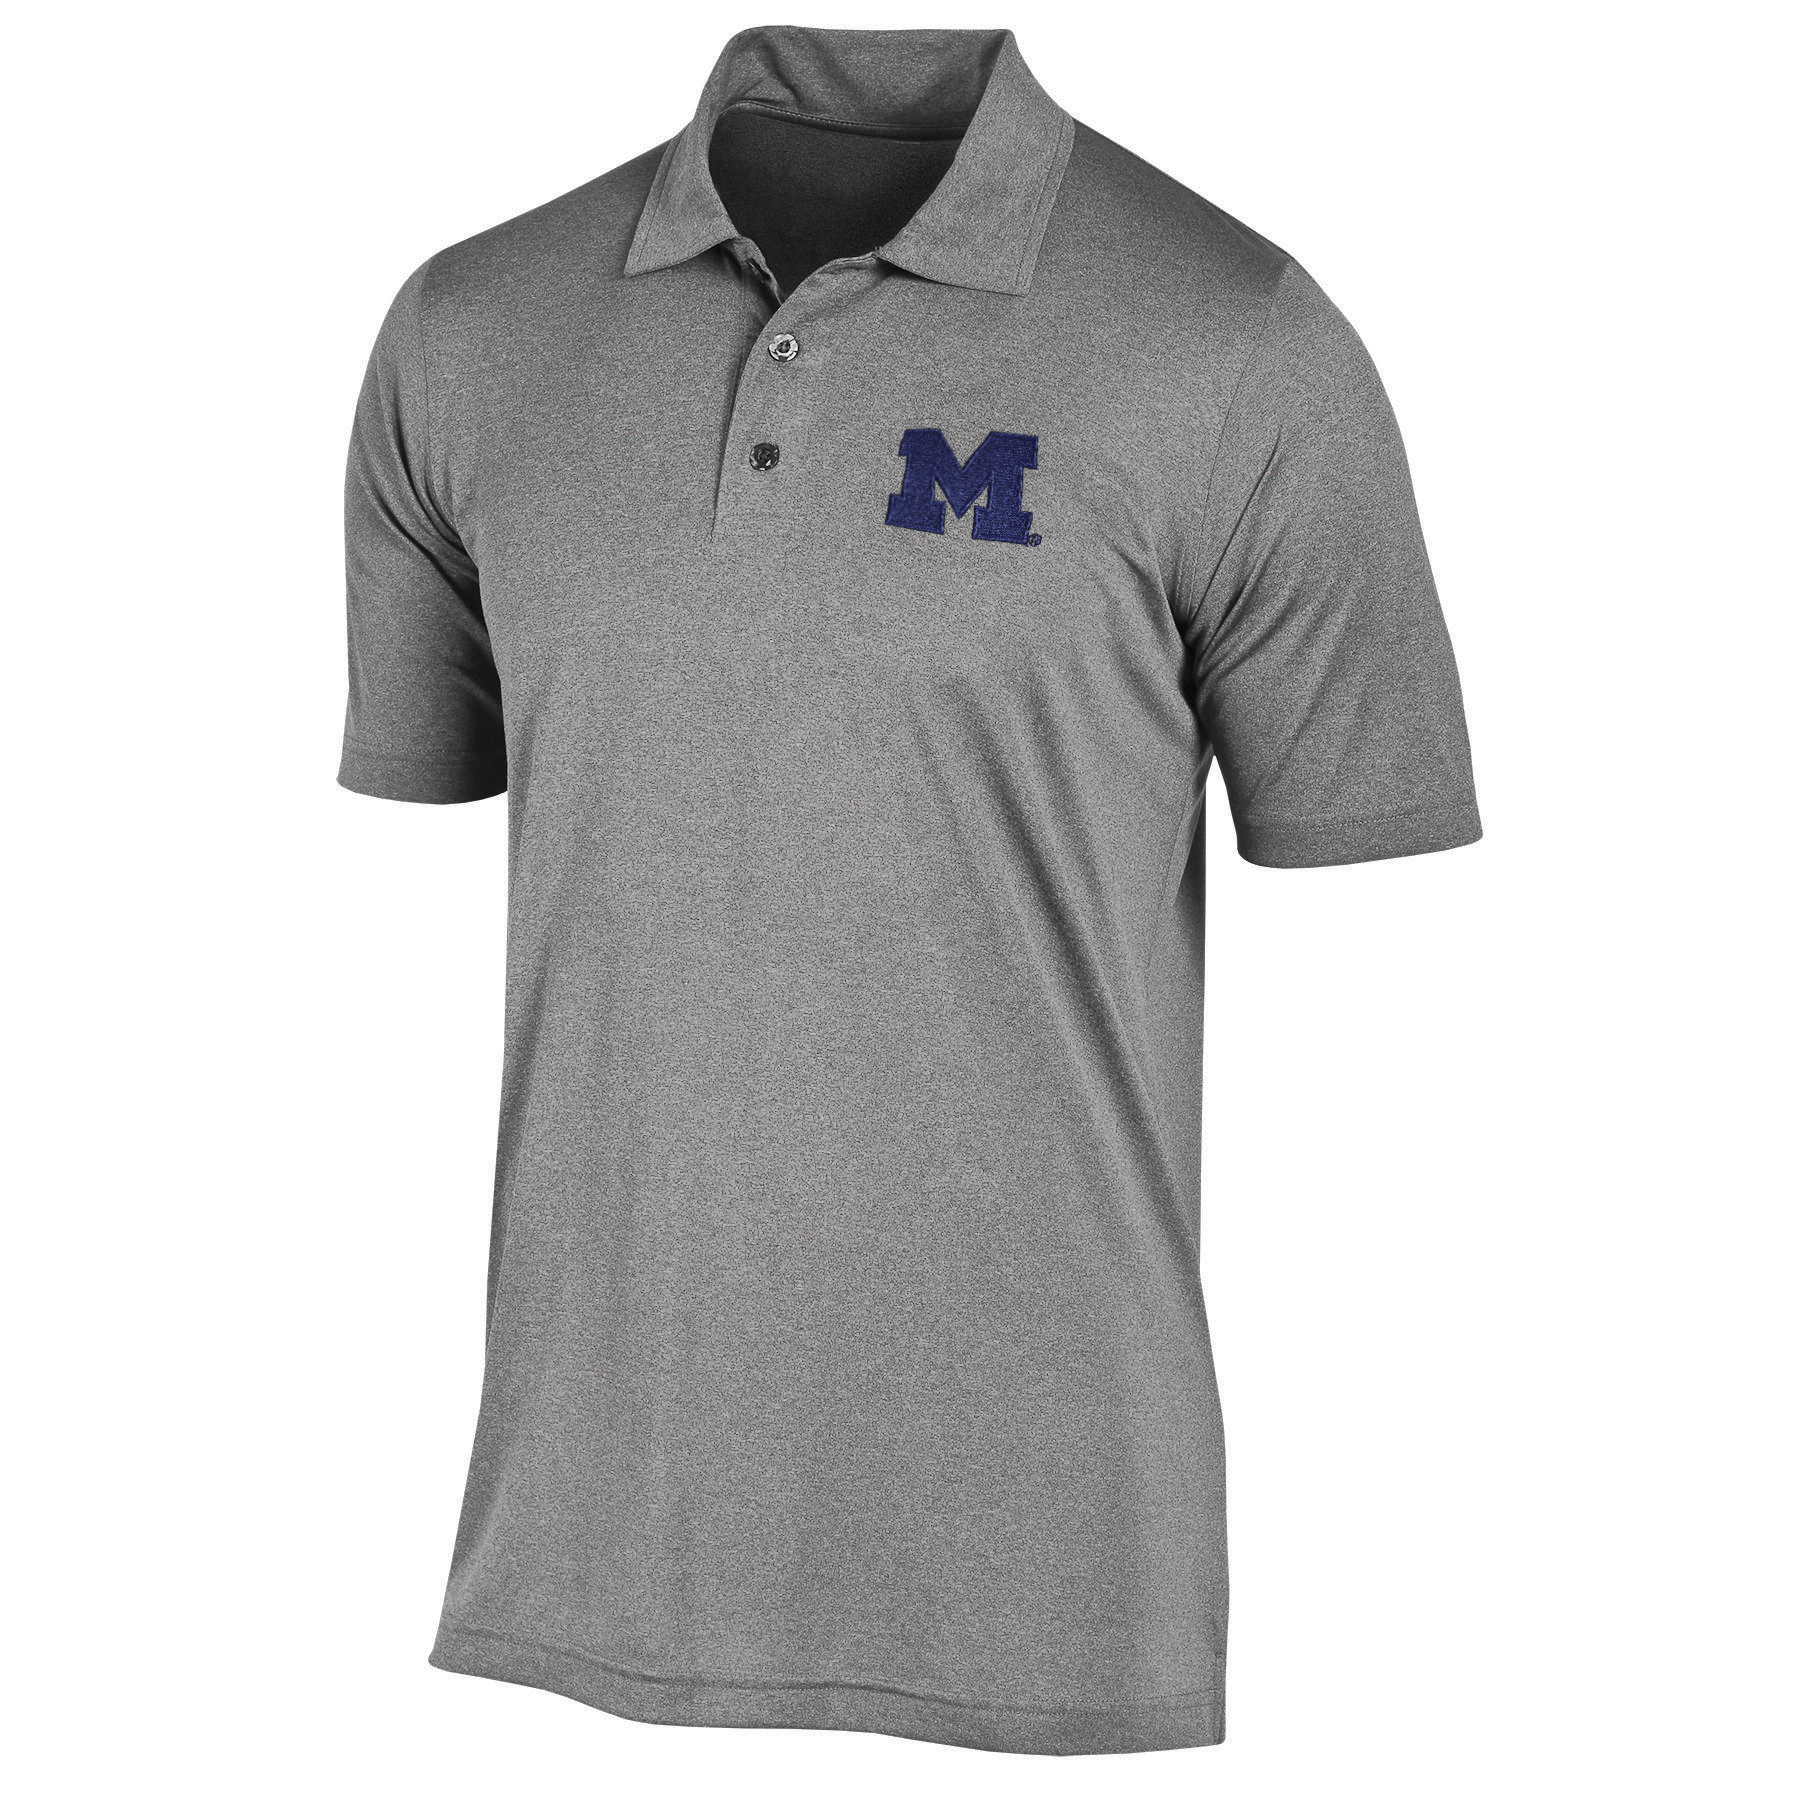 NCAA Men's Polo Shirt - University of Michigan Wolverines